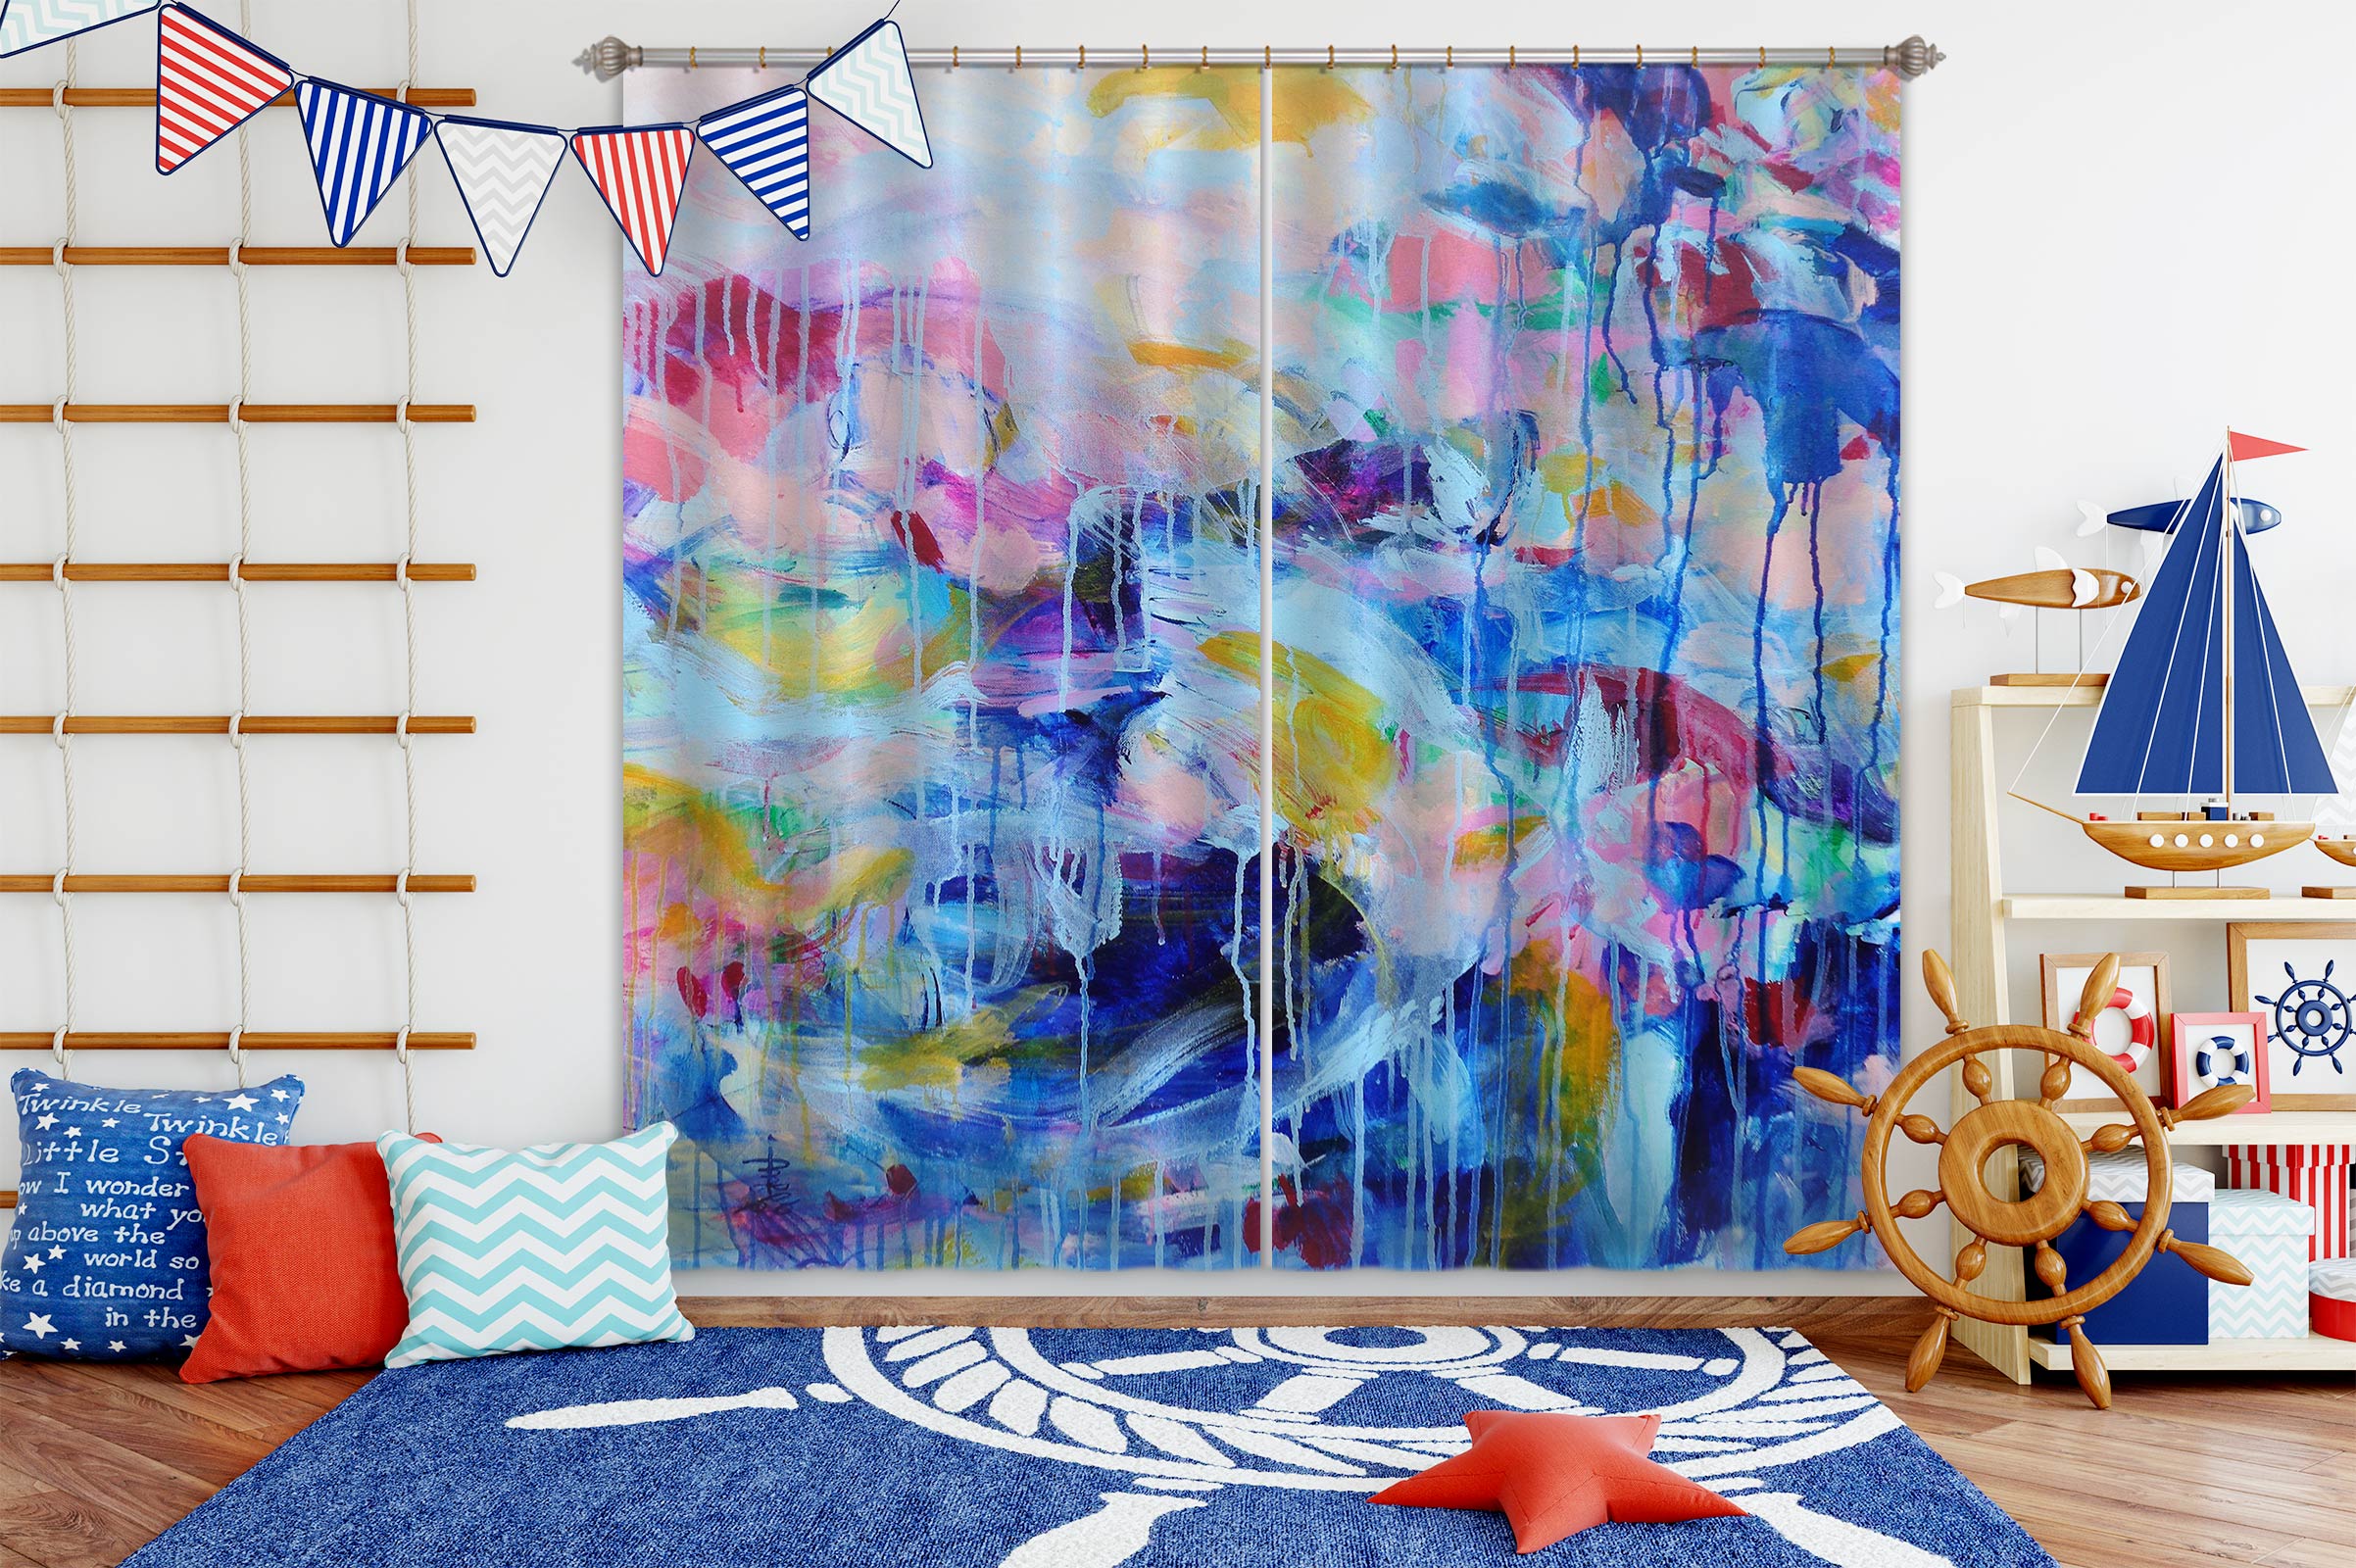 3D Colorful Watercolor 2324 Misako Chida Curtain Curtains Drapes